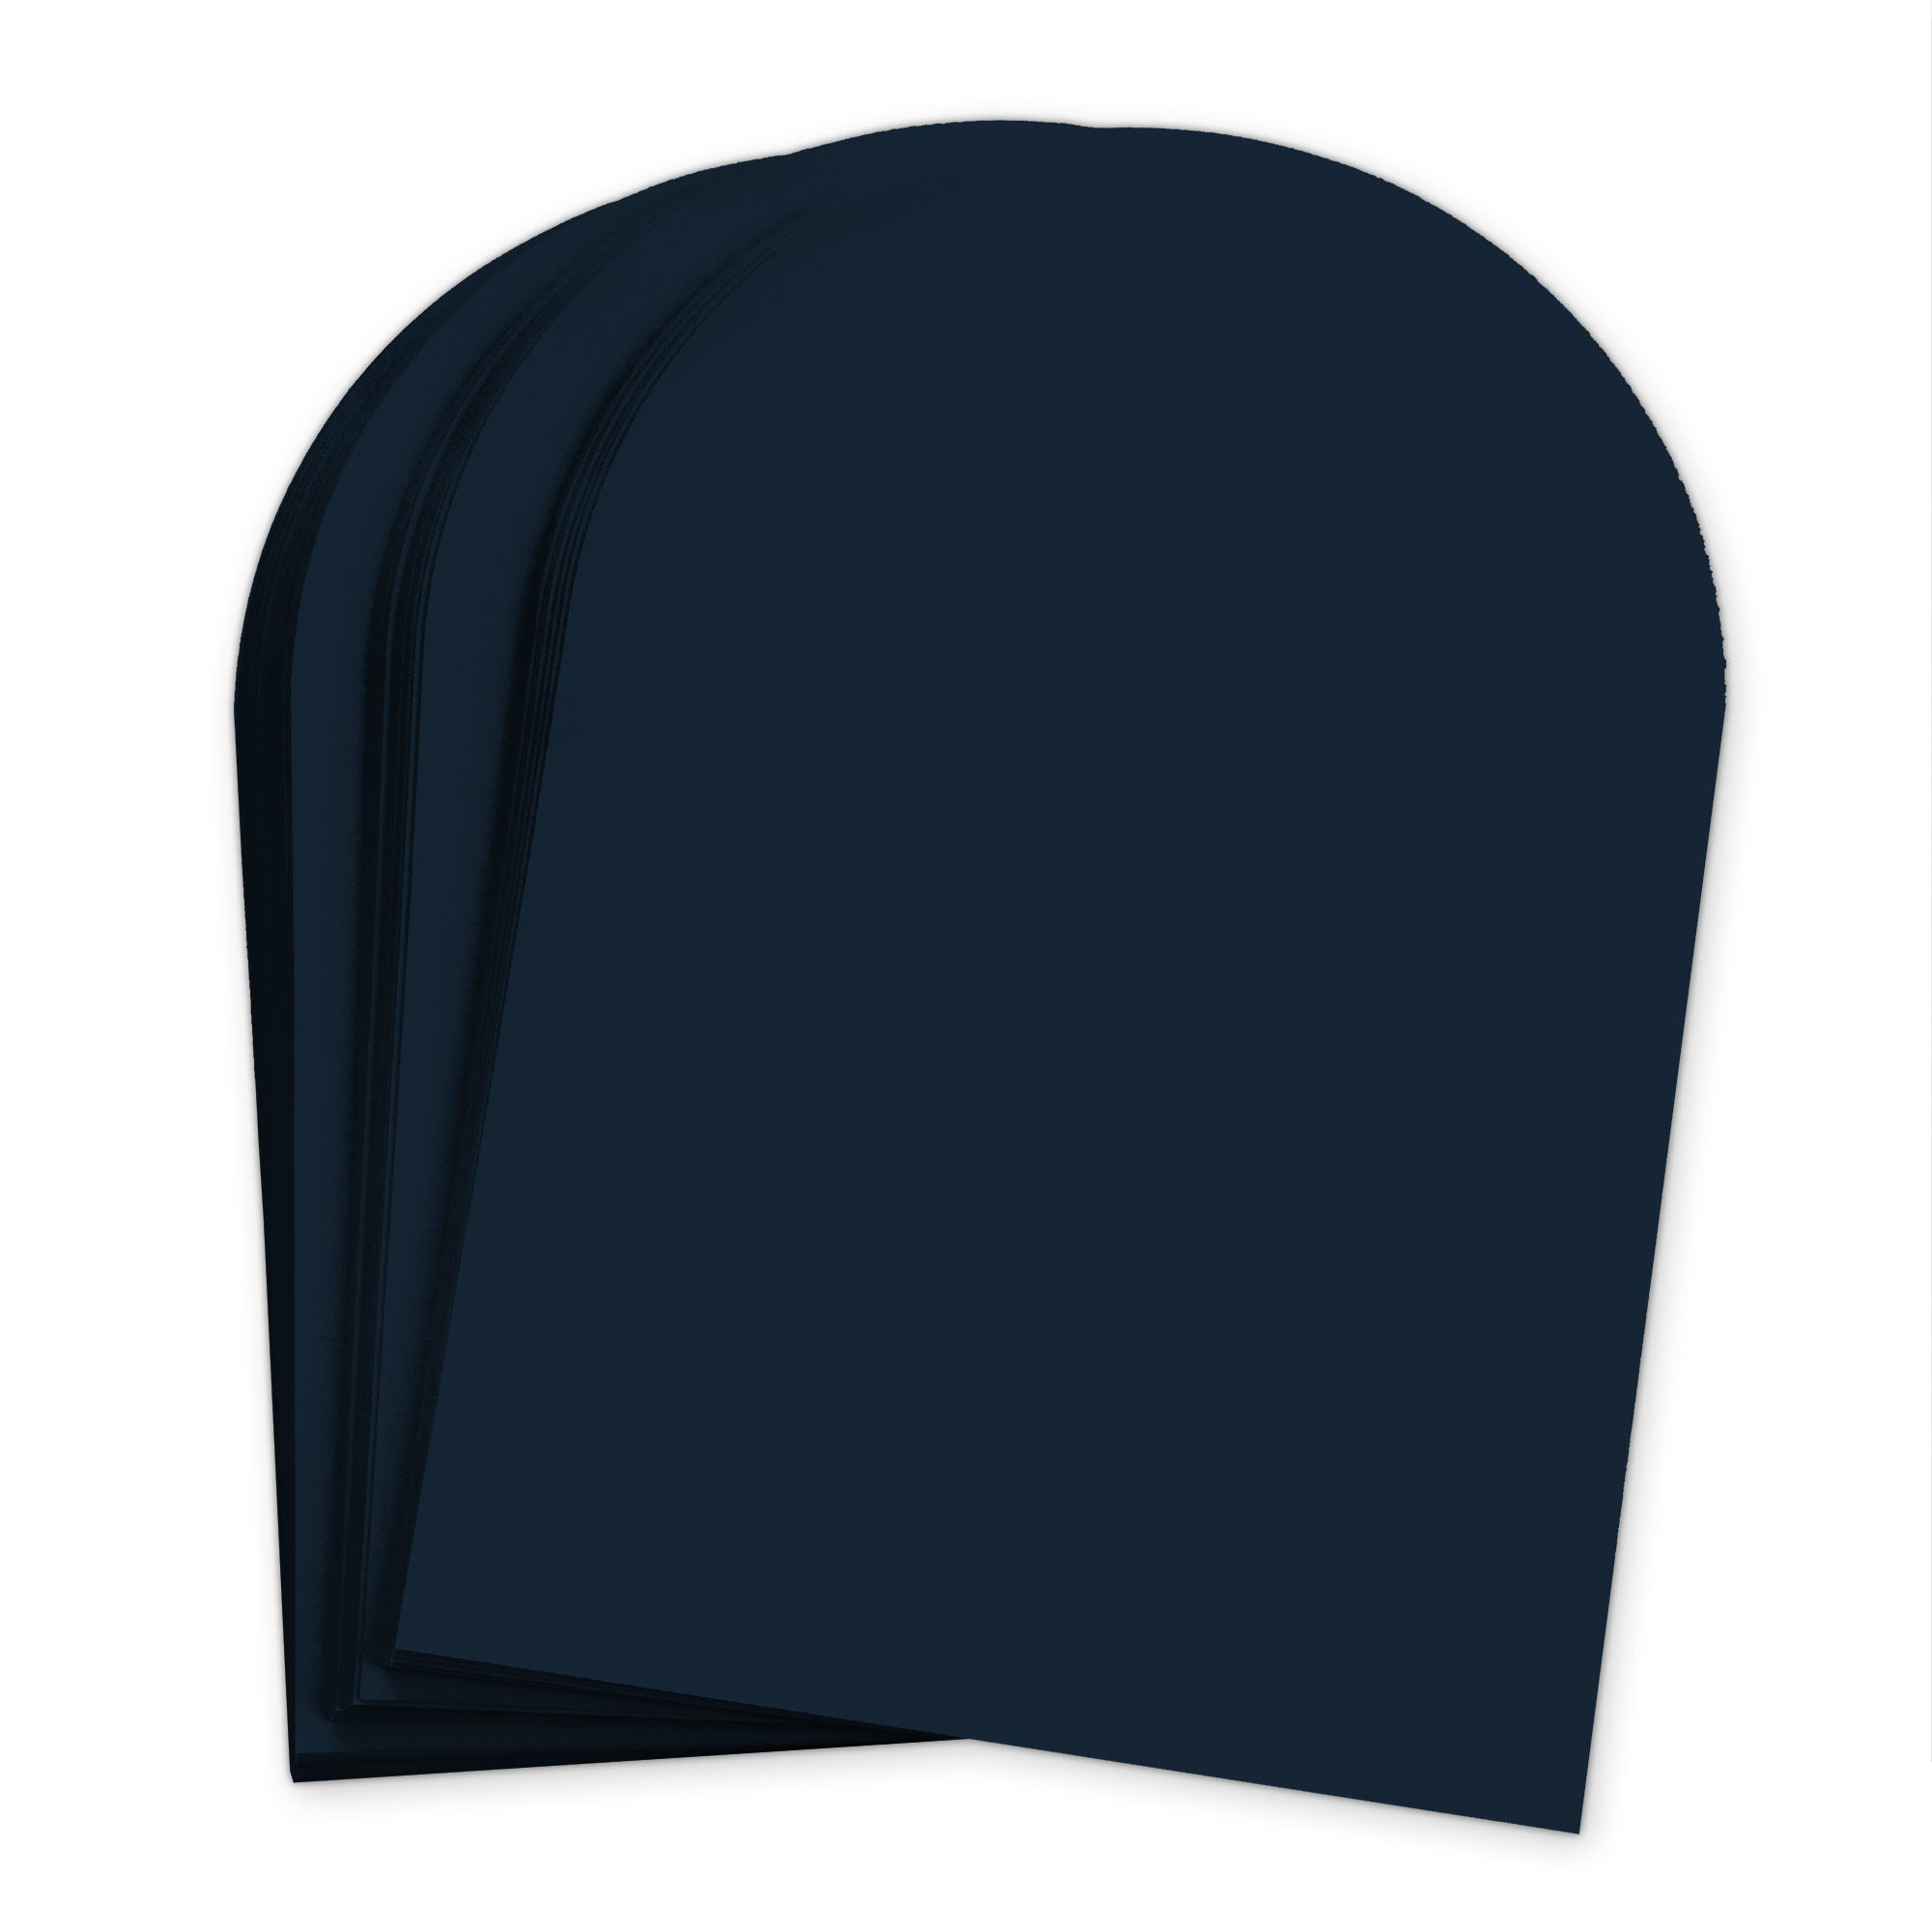 Dark Navy Blue Arch Shaped Card - A2 Gmund Colors Matt 4 1/4 x 5 1/2 111C